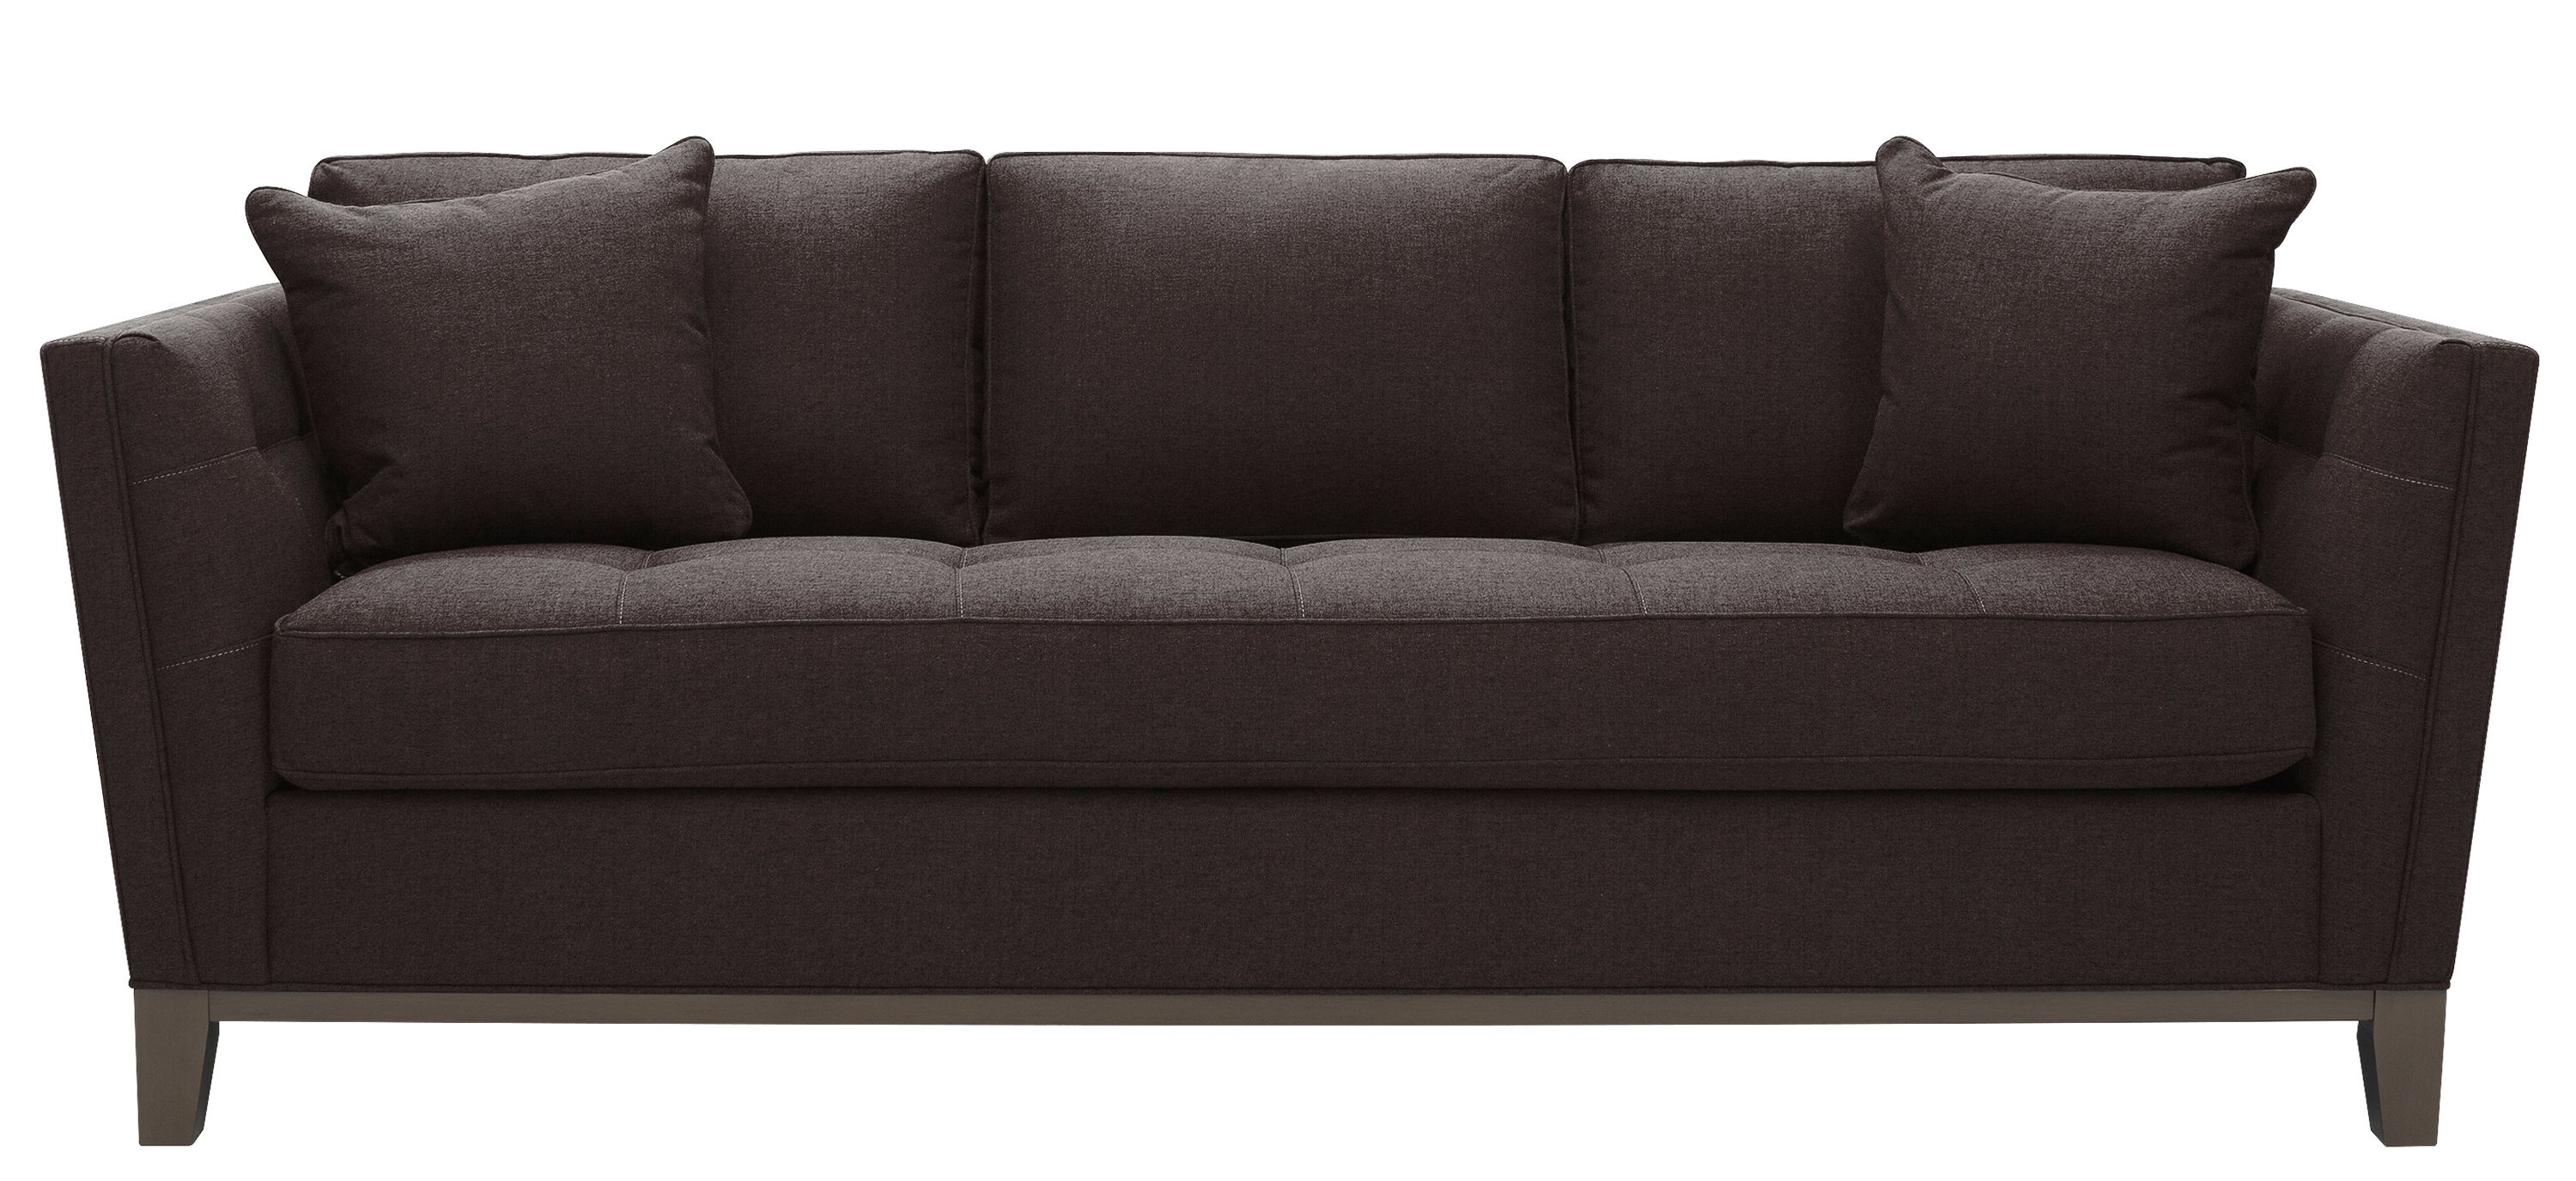 Macauley Microfiber Sofa